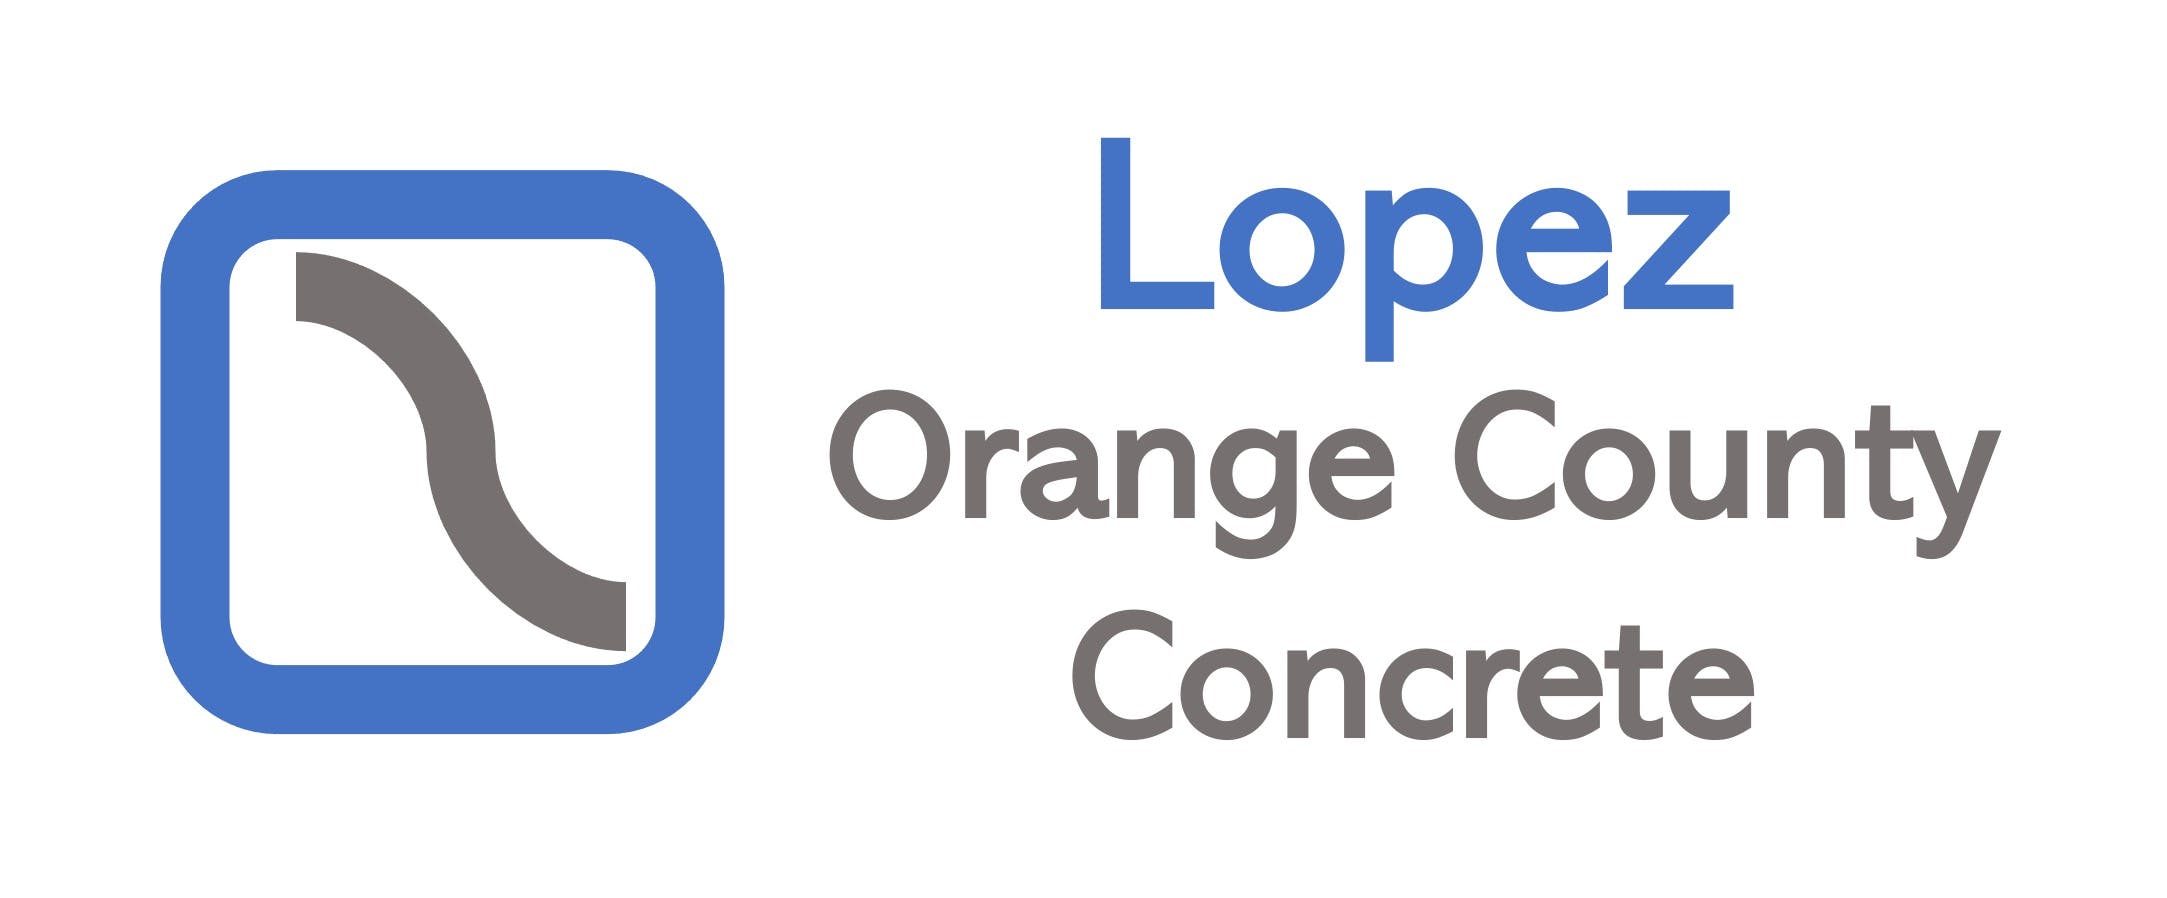 Lopez Orange County Concrete logo